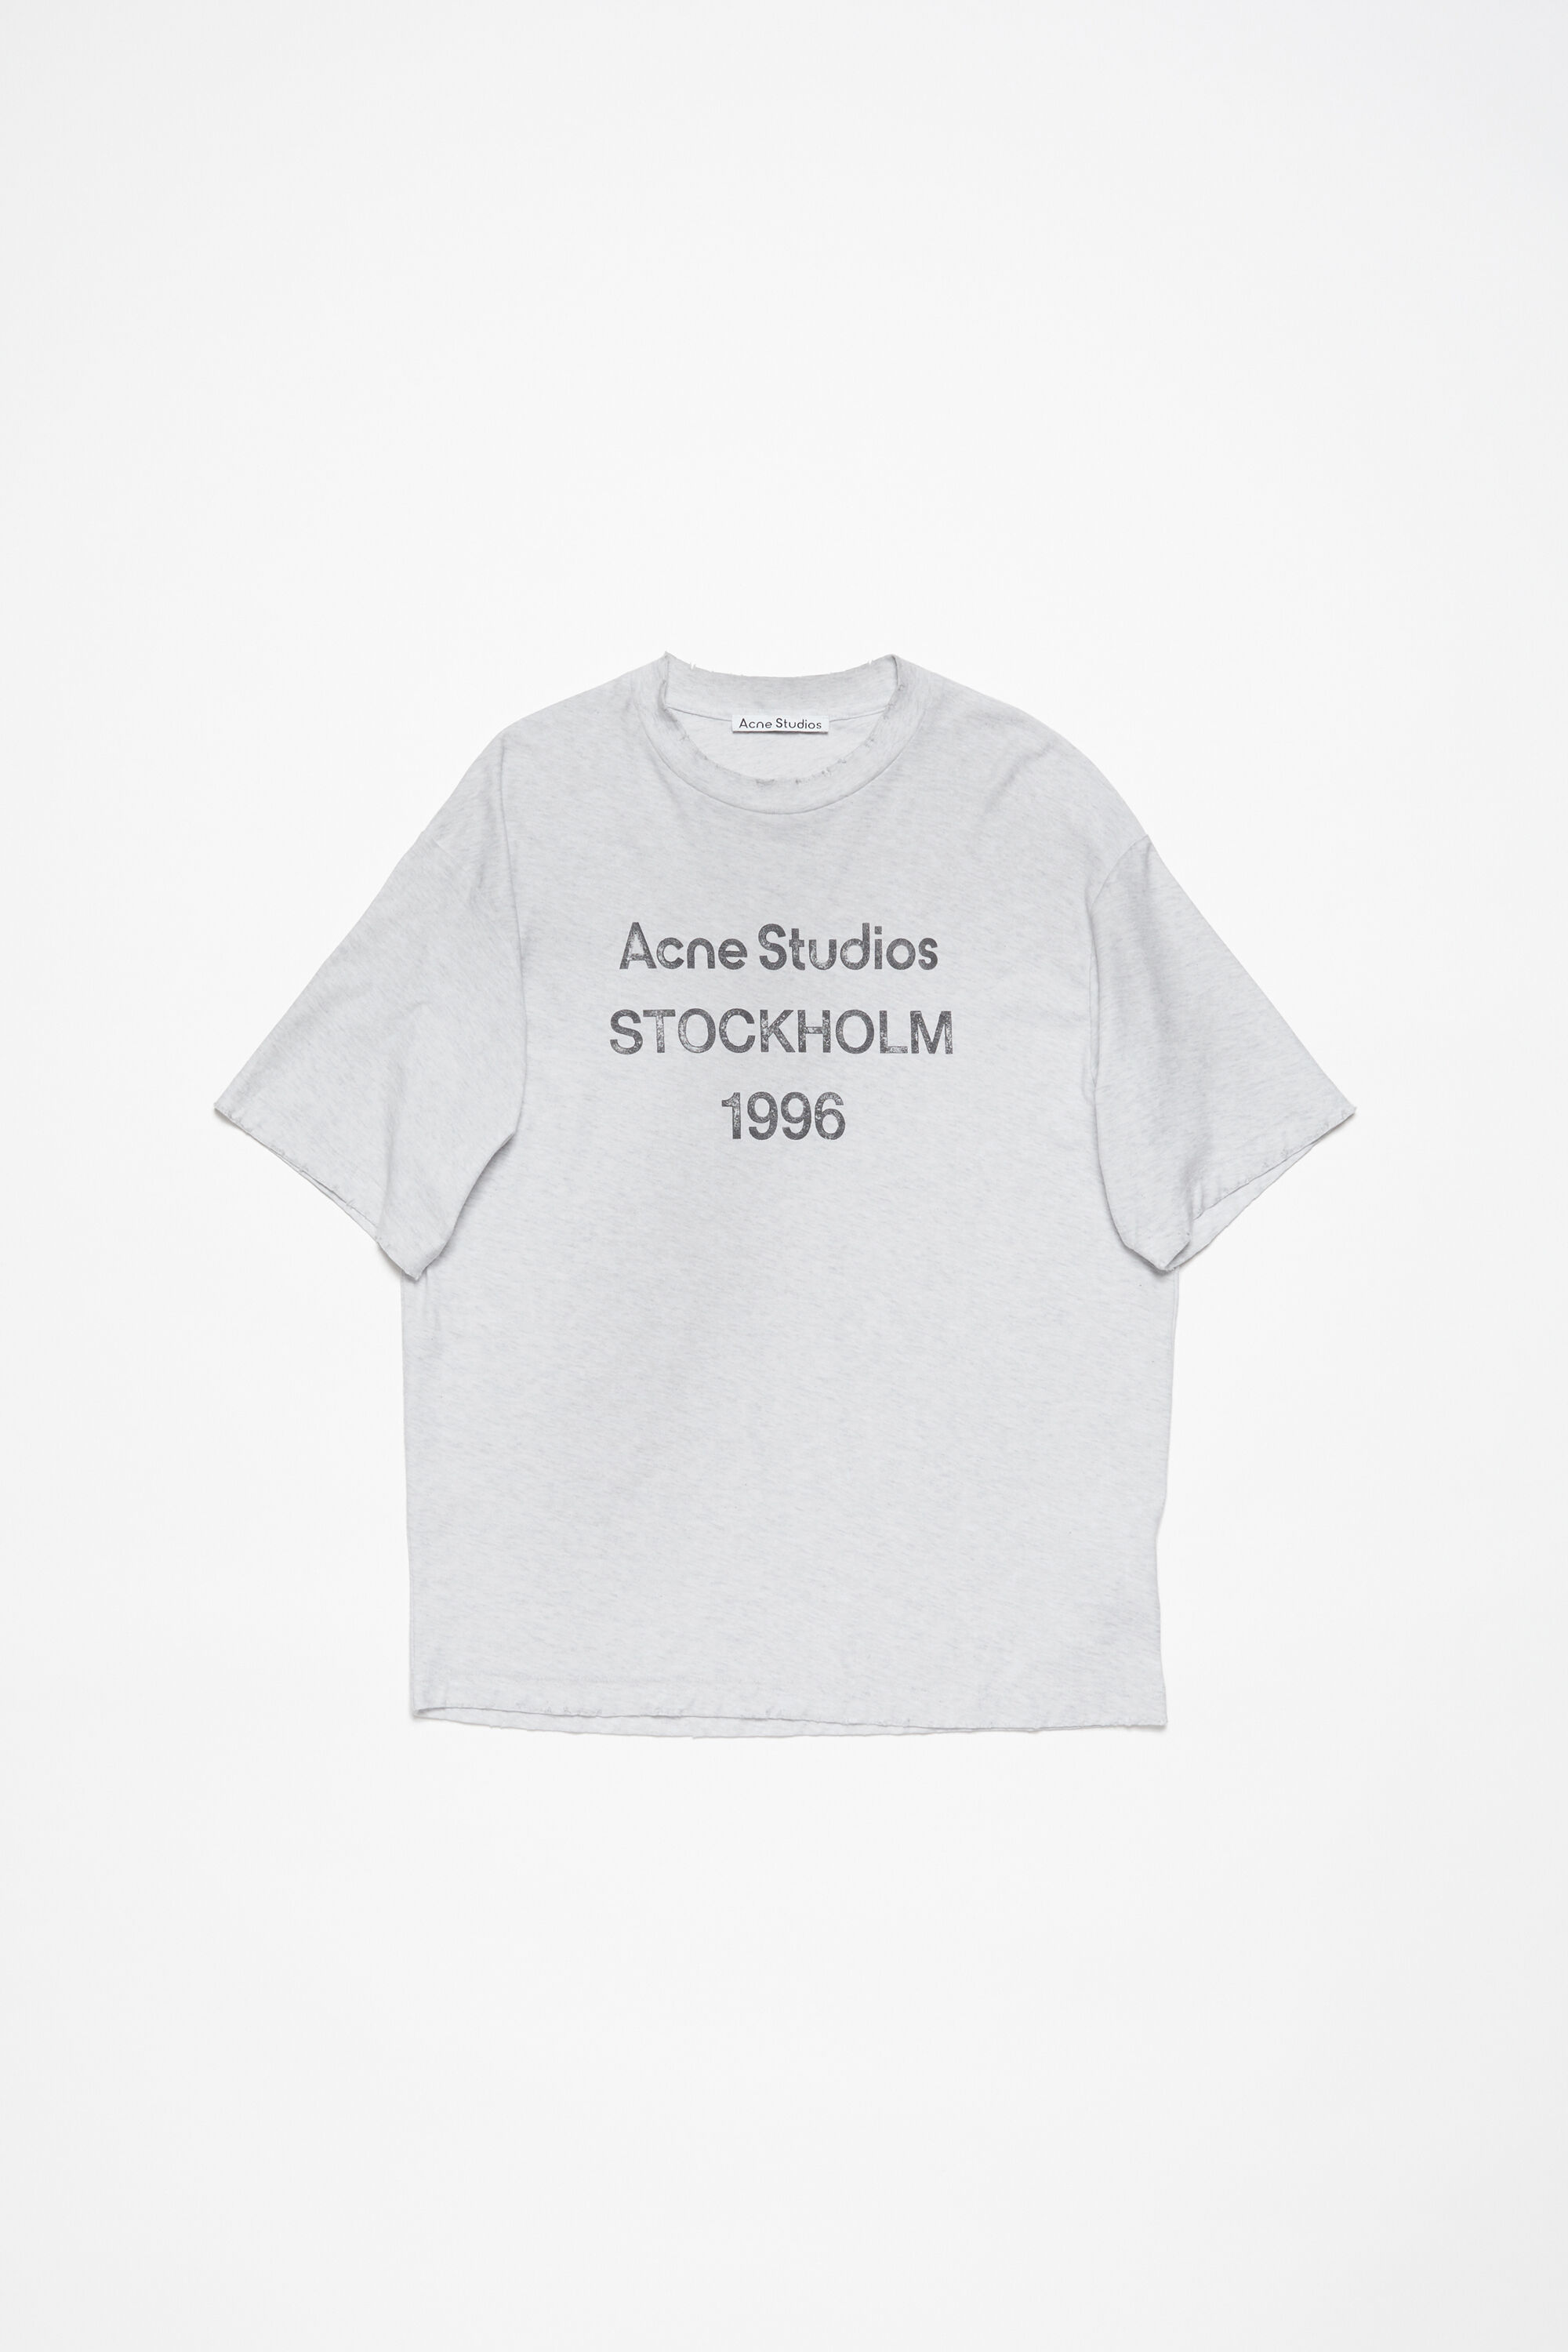 Acne Studios 1996 Tシャツグレー オーバーサイズ